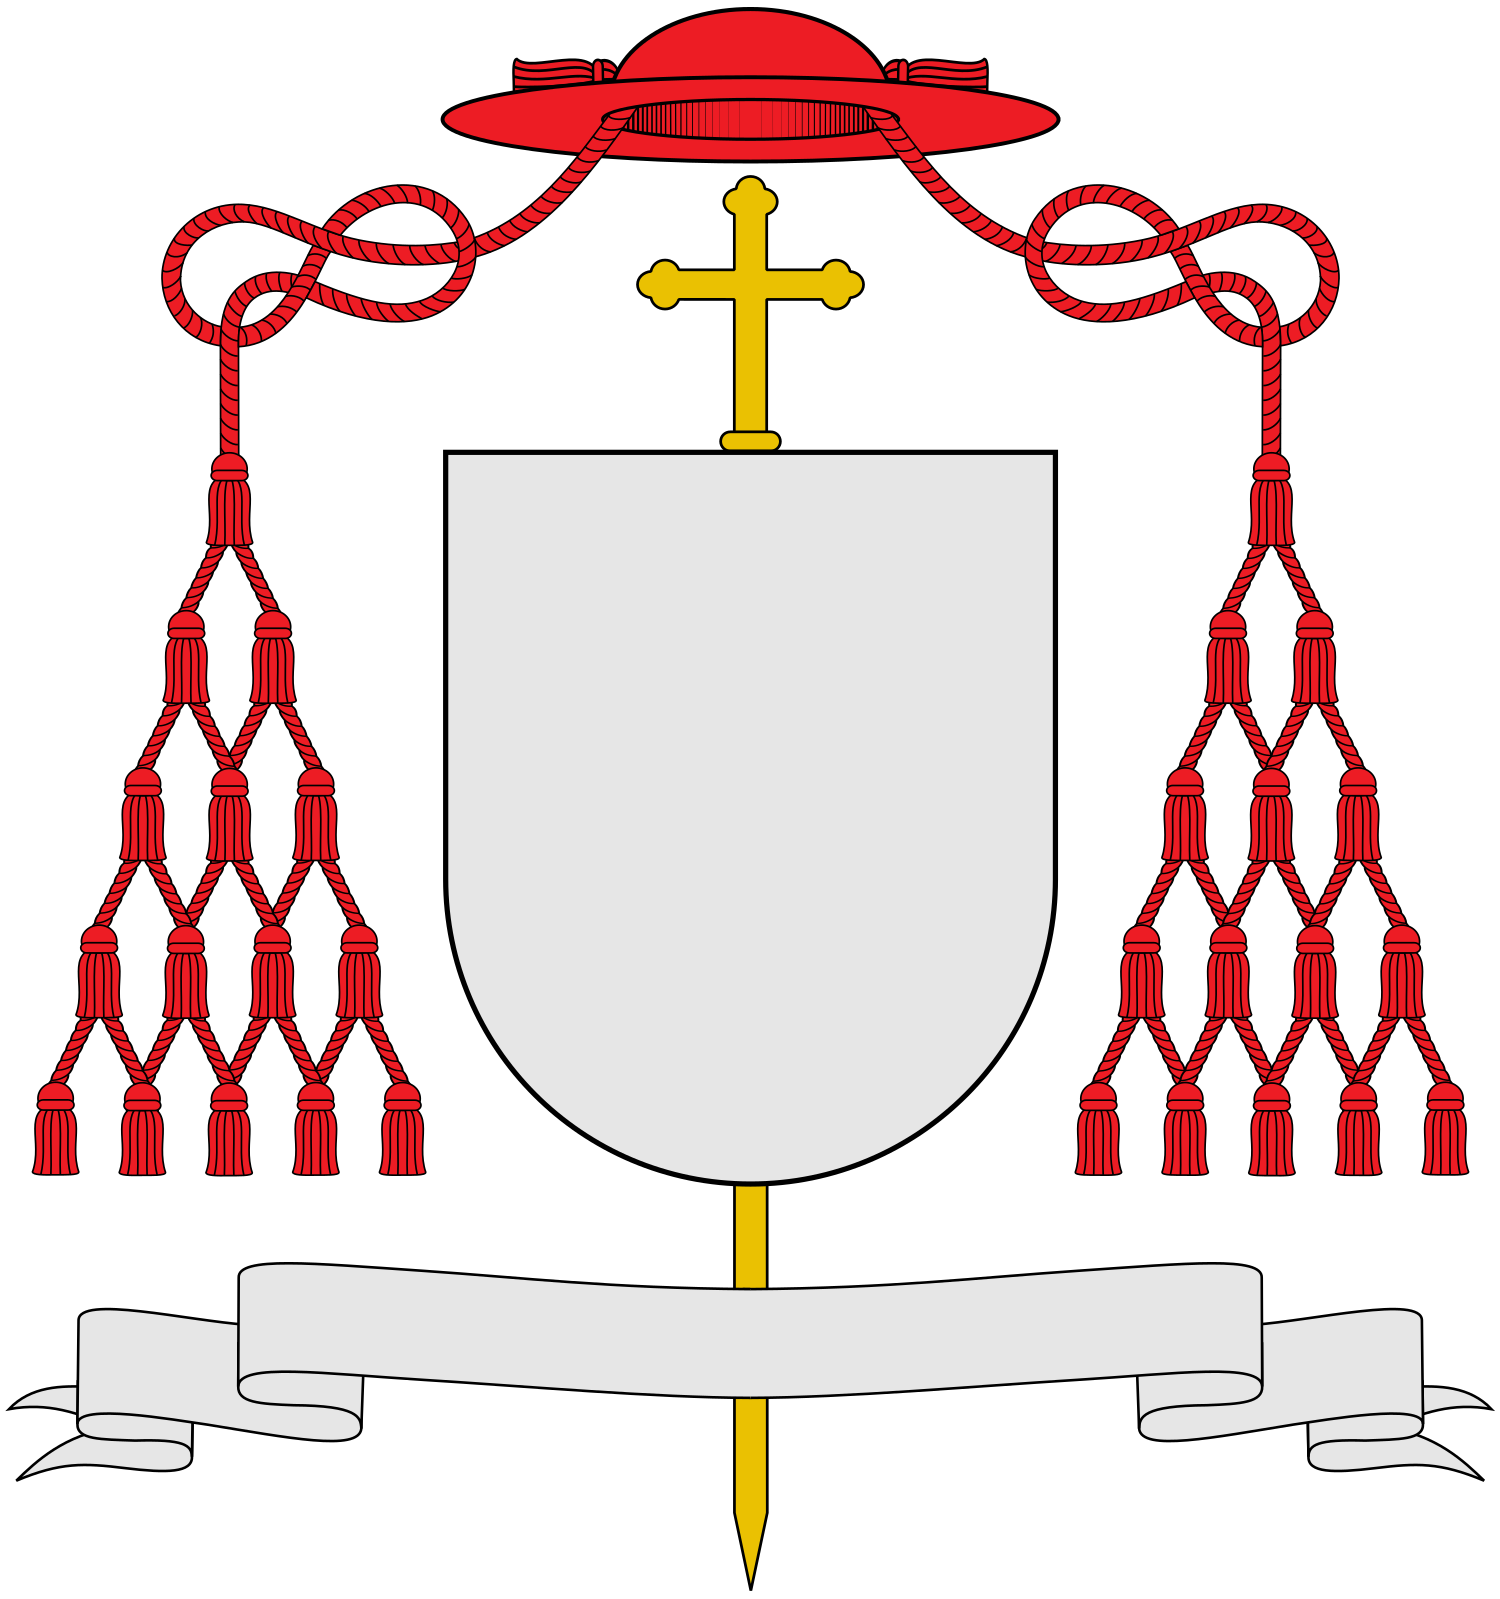 Cardinal (Catholic Church) - Wikiwand